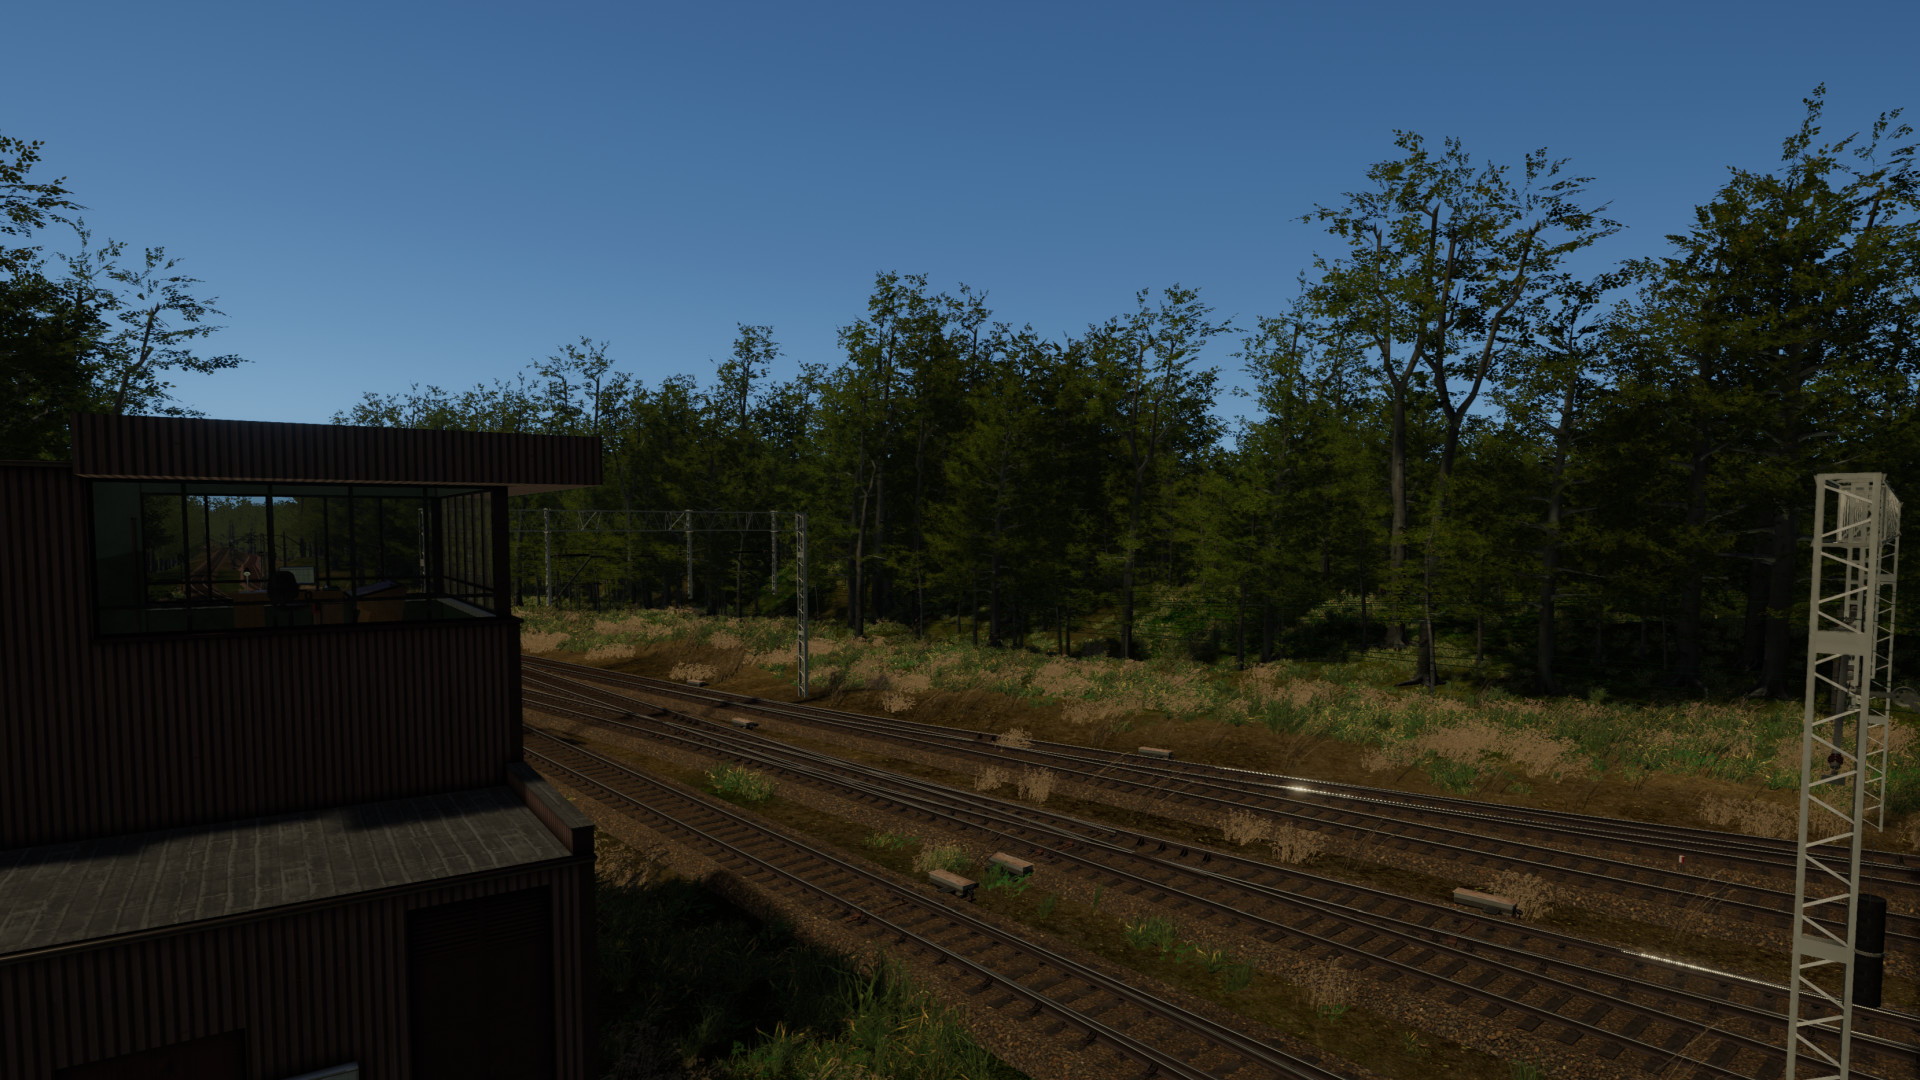 SimRail - The Railway Simulator - screenshot 7